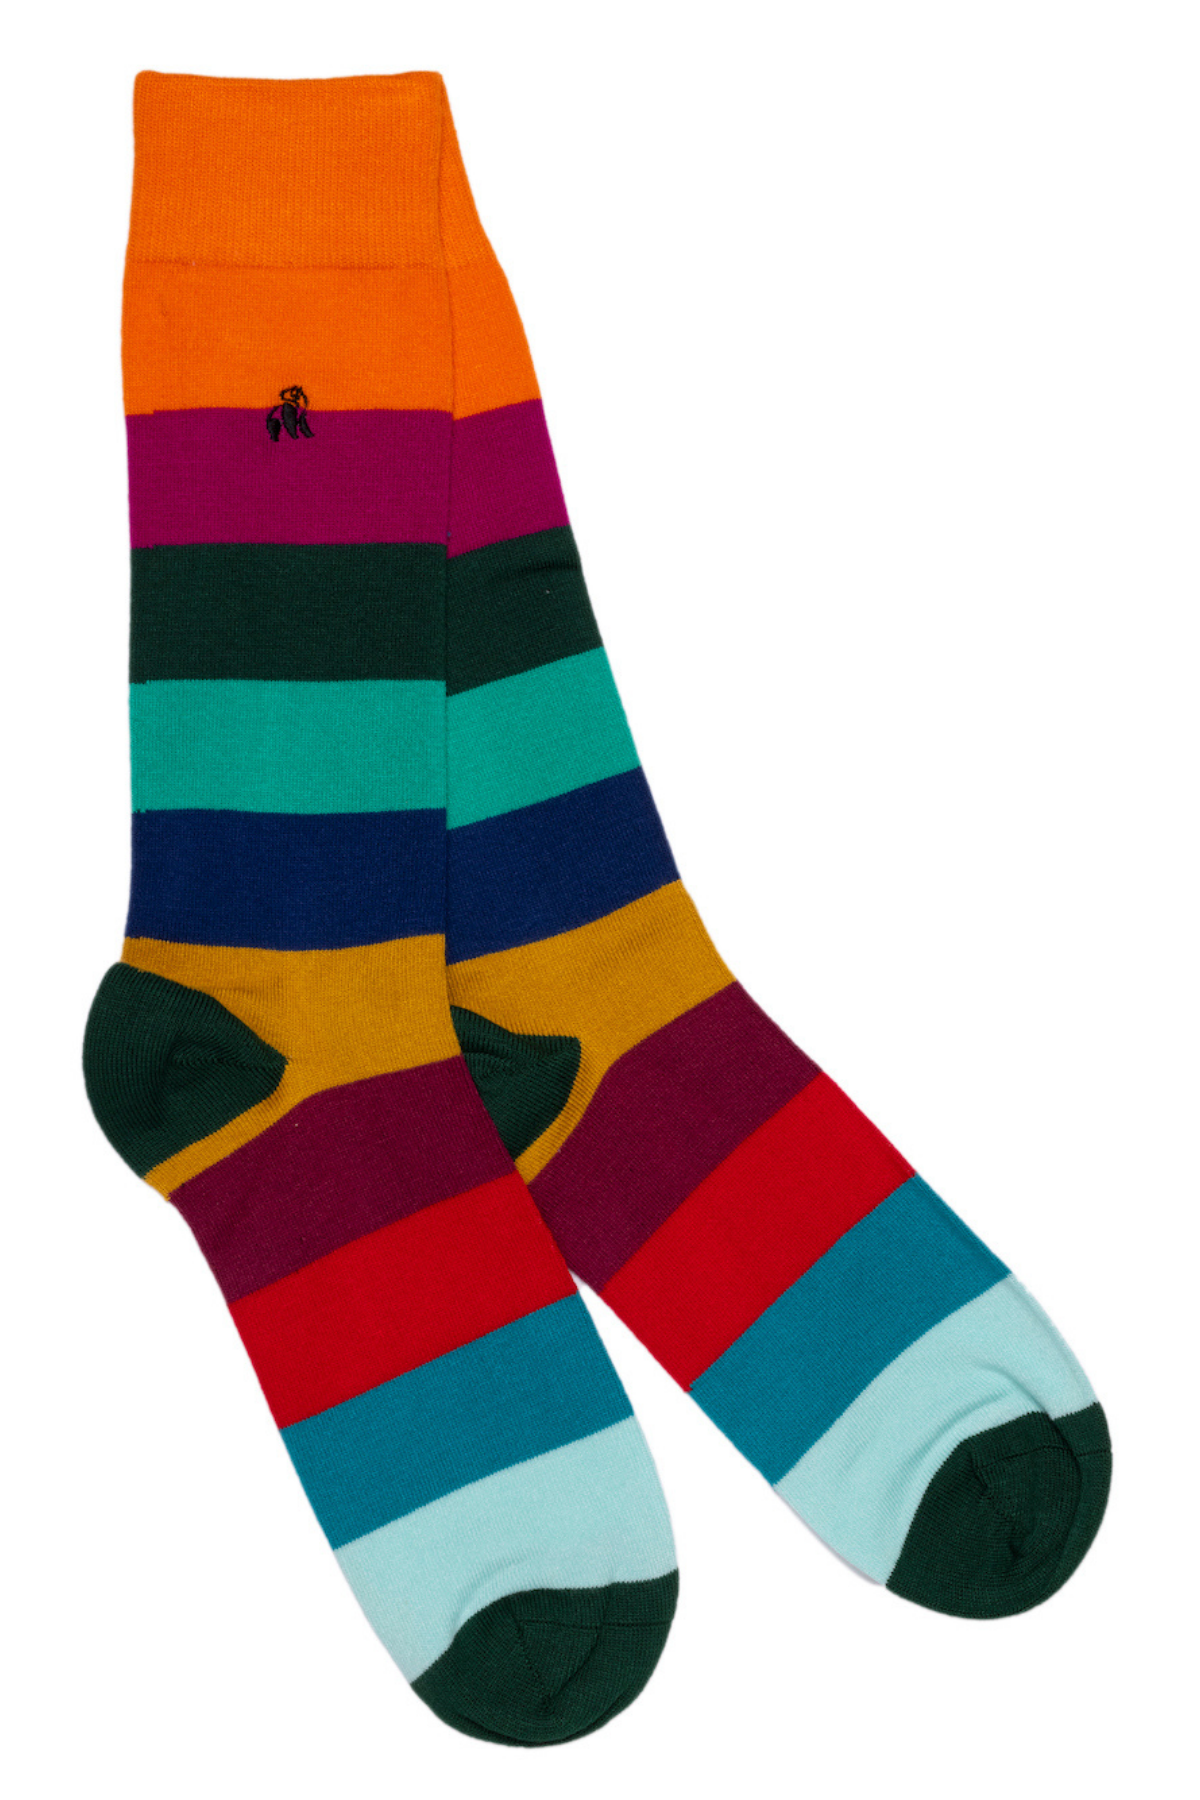 Narrow Stripe Sock Bundle - Four Pairs